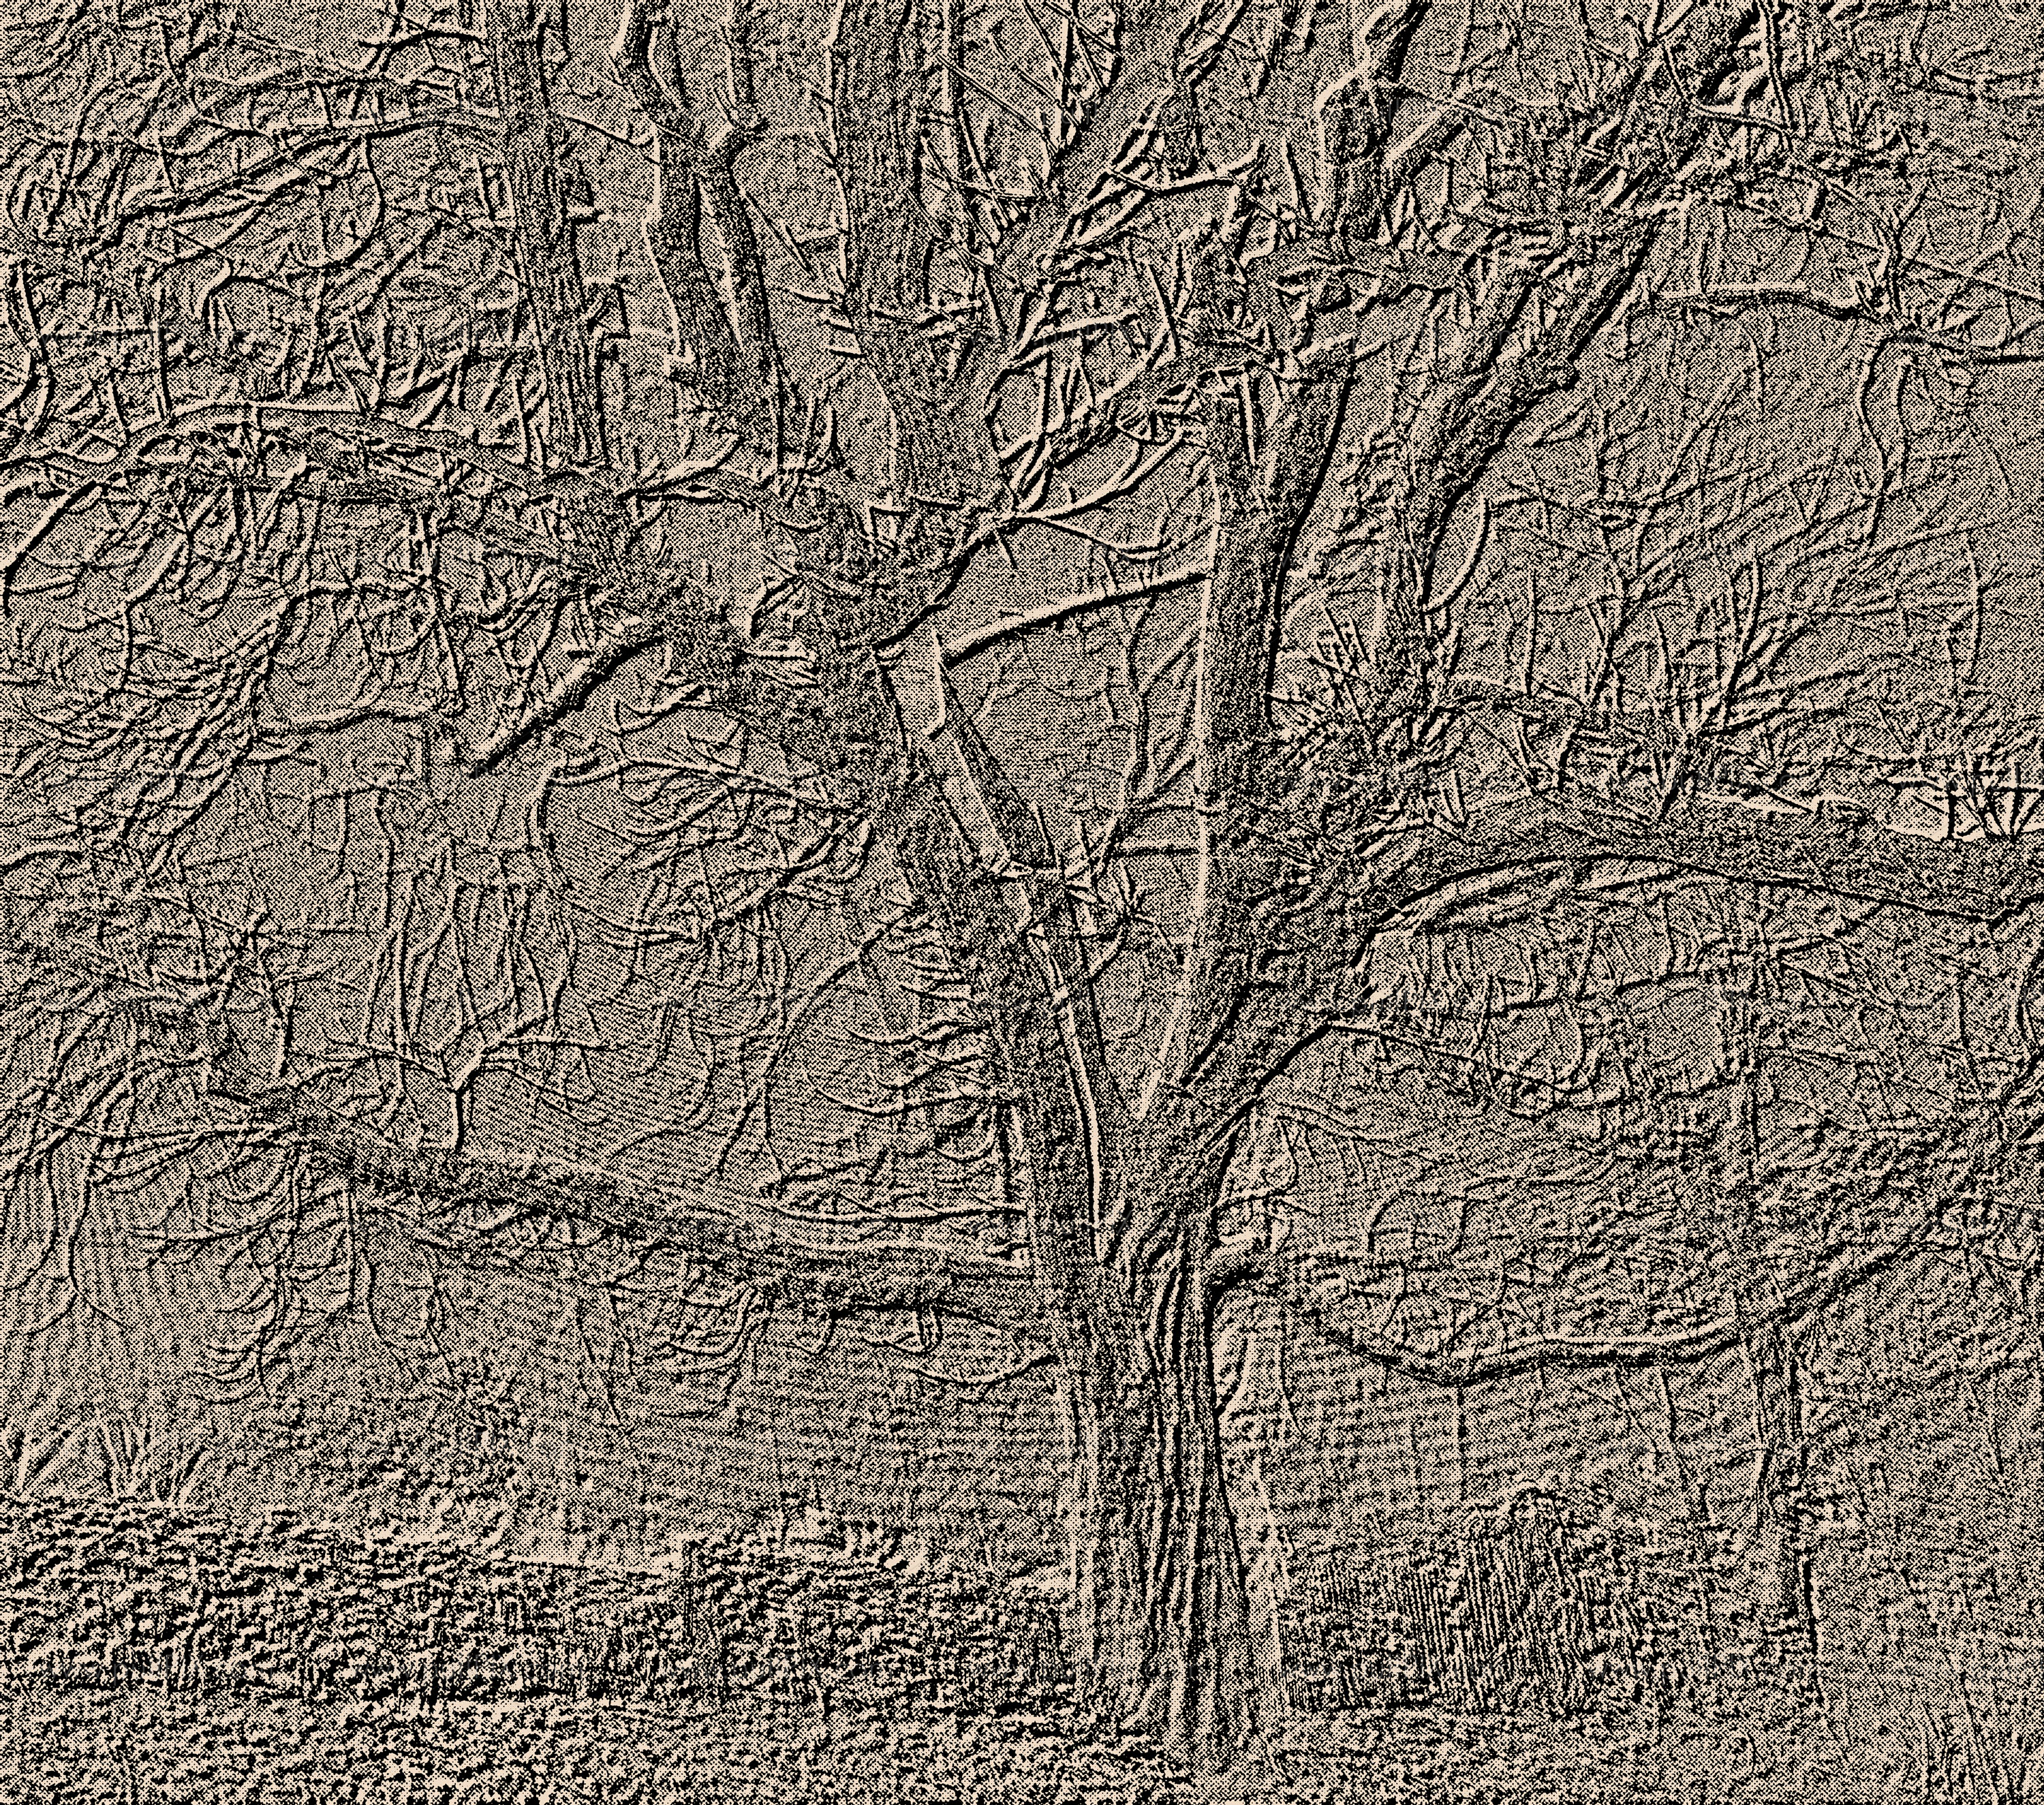 Preview Baum Monochrom.jpg